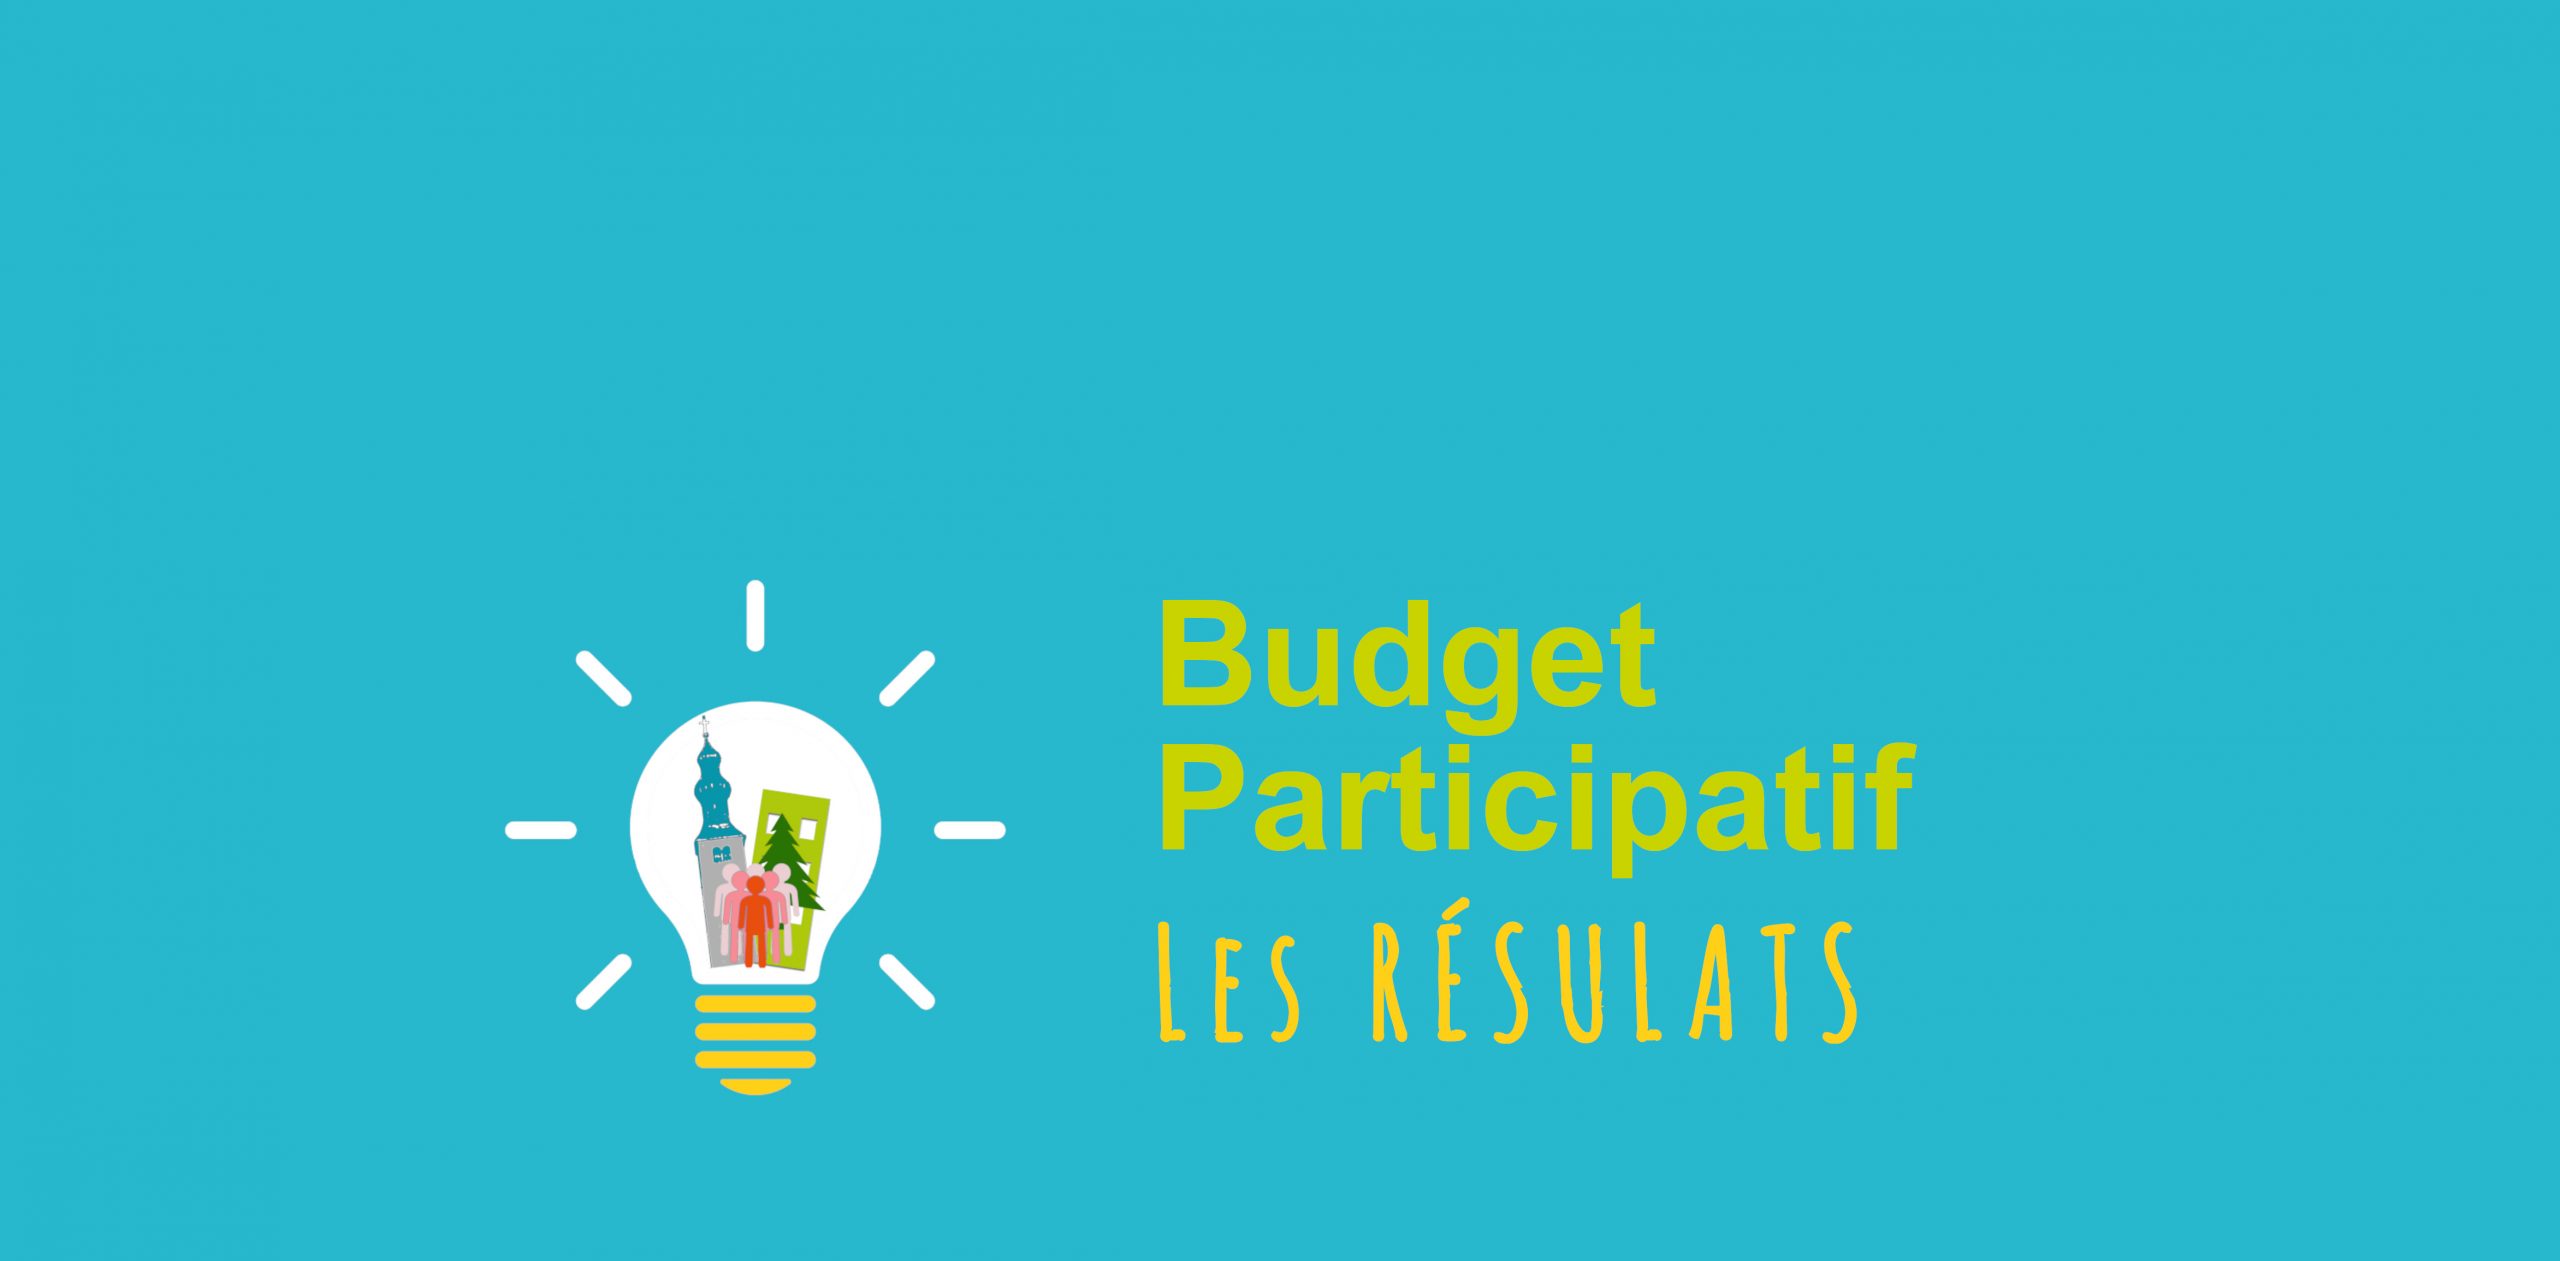 Budget participatif 2021 : les RÉSULTATS